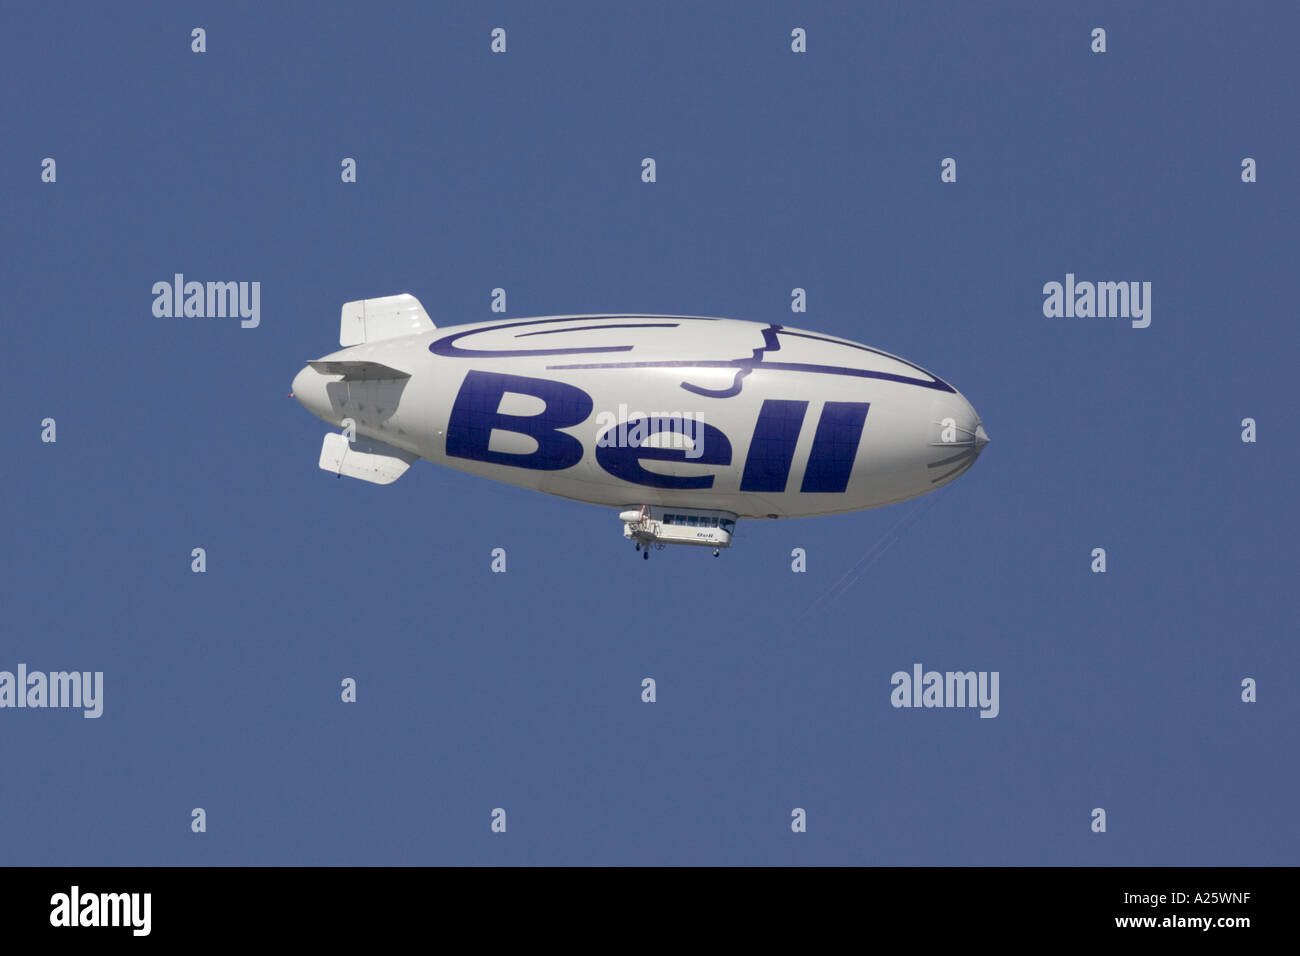 Advertising airship Stock Photo